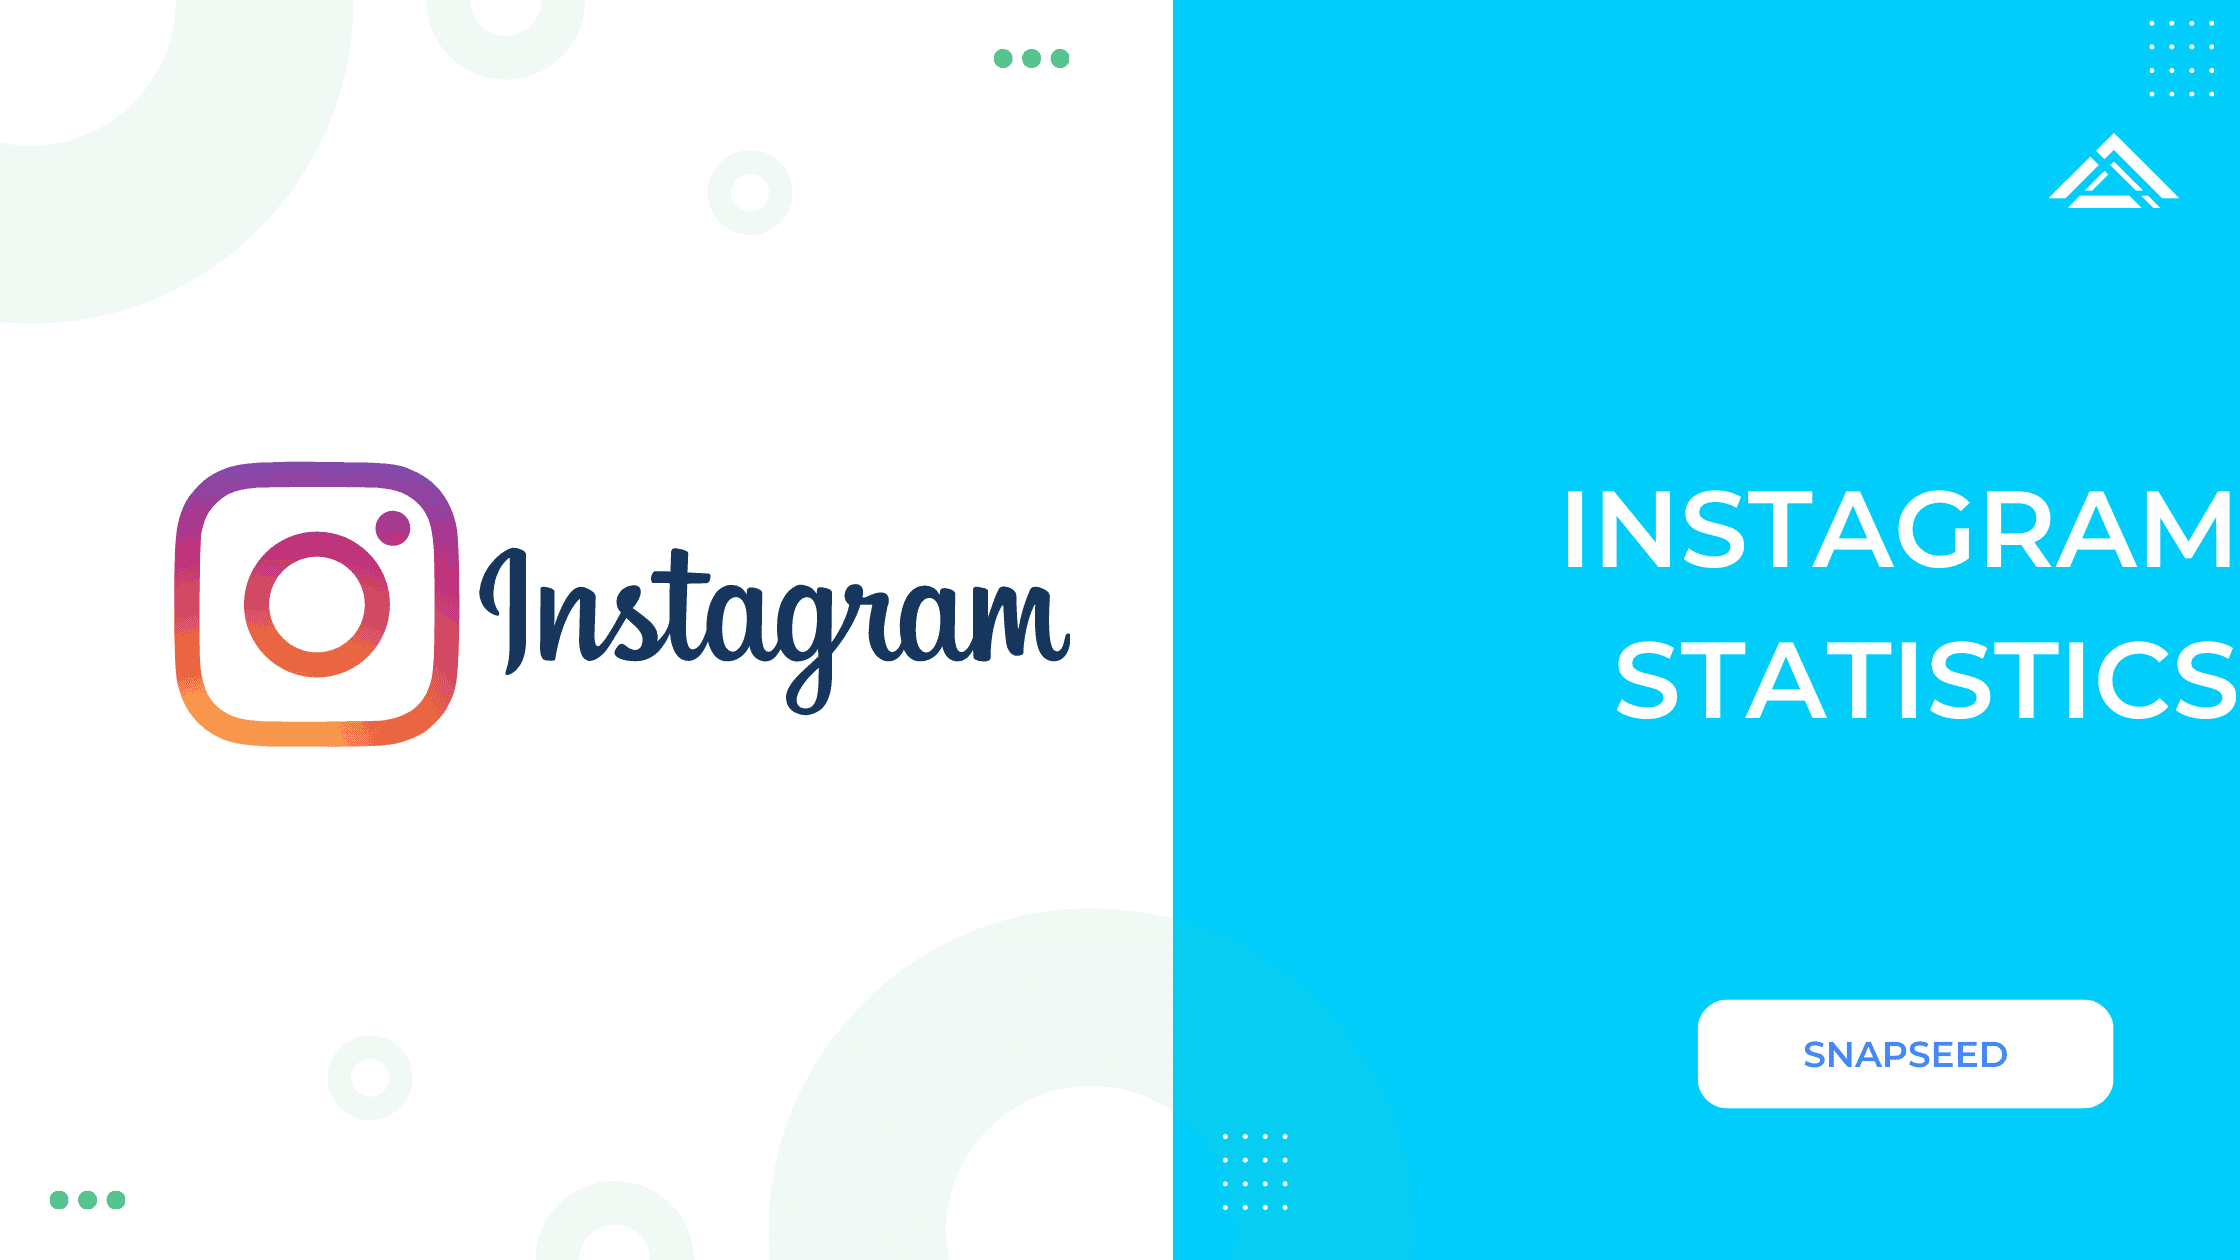 Instagram Statistics - Snapseed